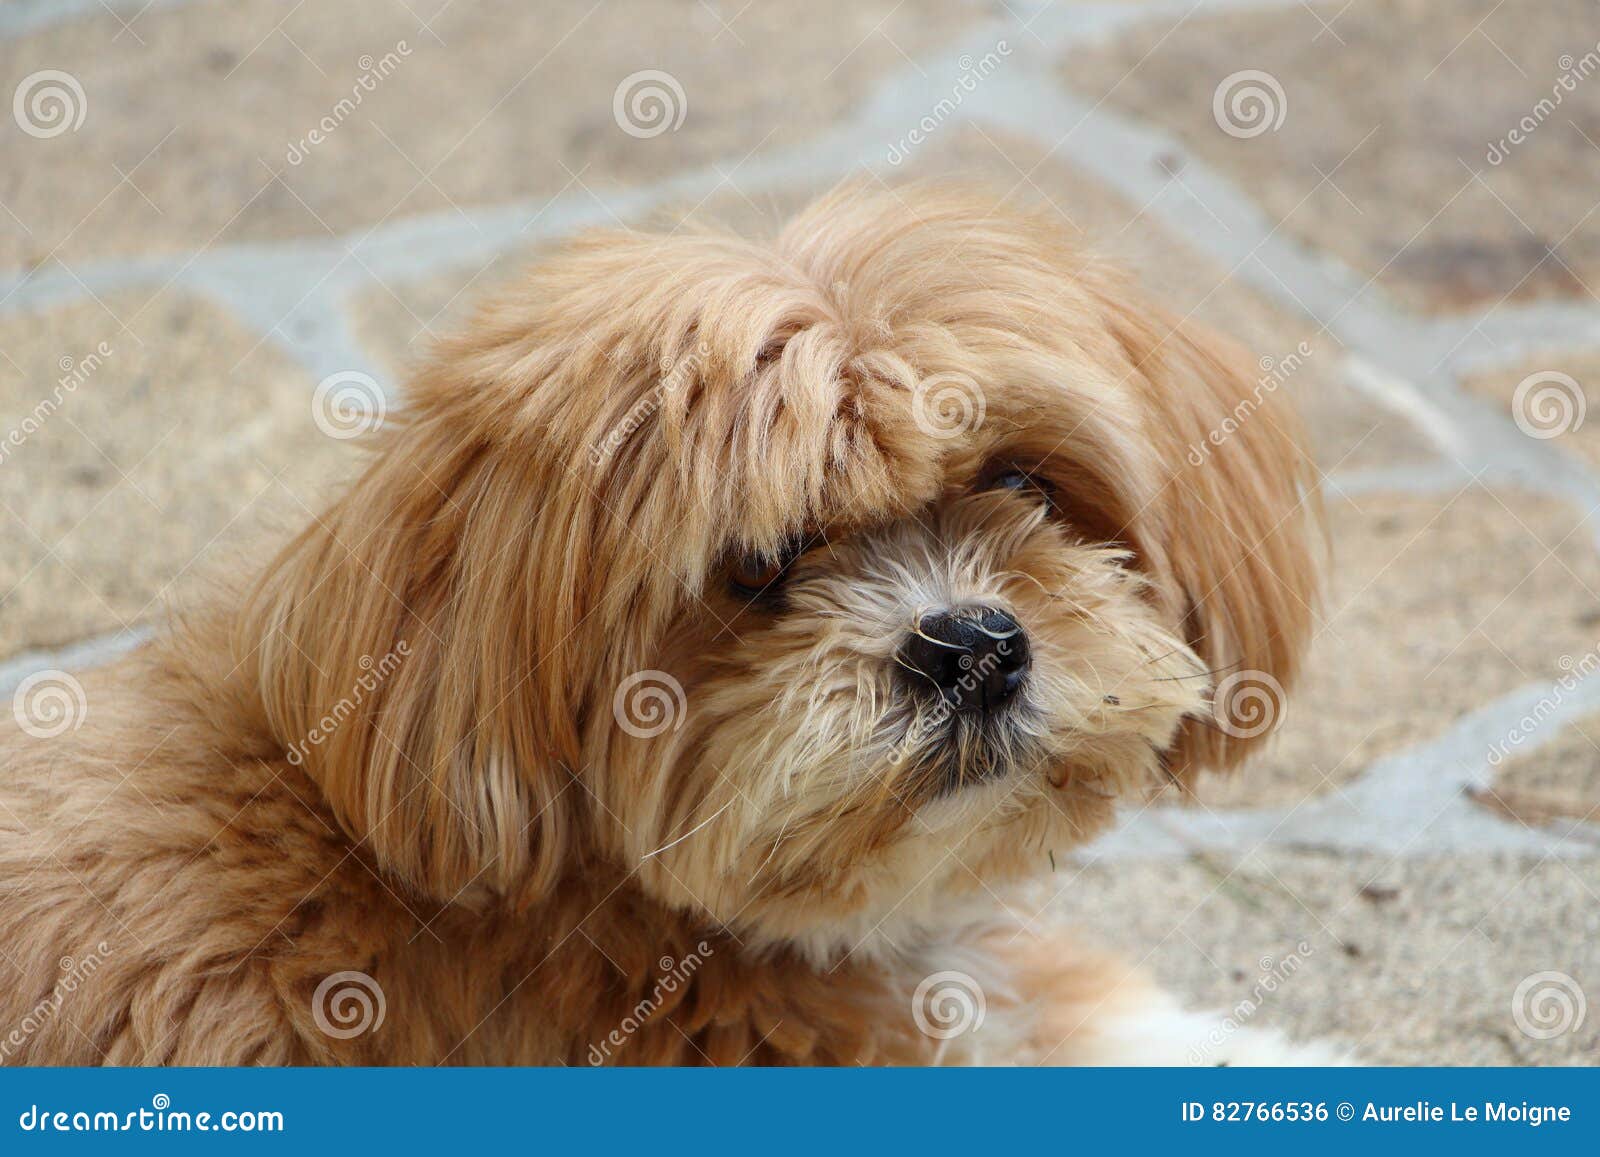 billede tab endelse Lhasa Apso dog in a garden stock photo. Image of animal - 82766536